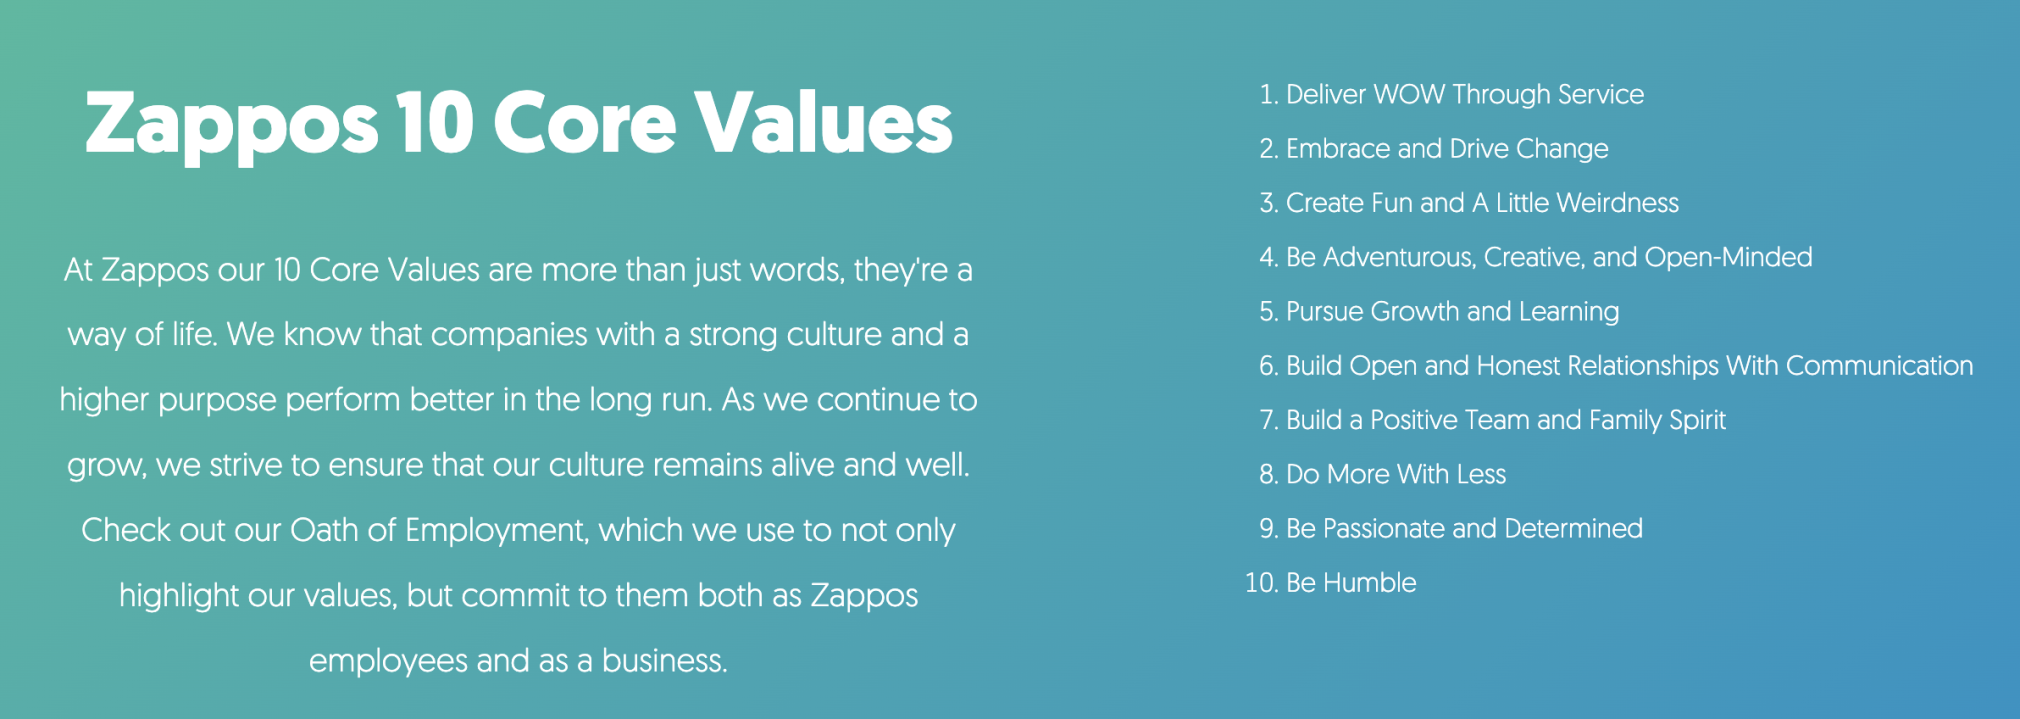 Zappos core values